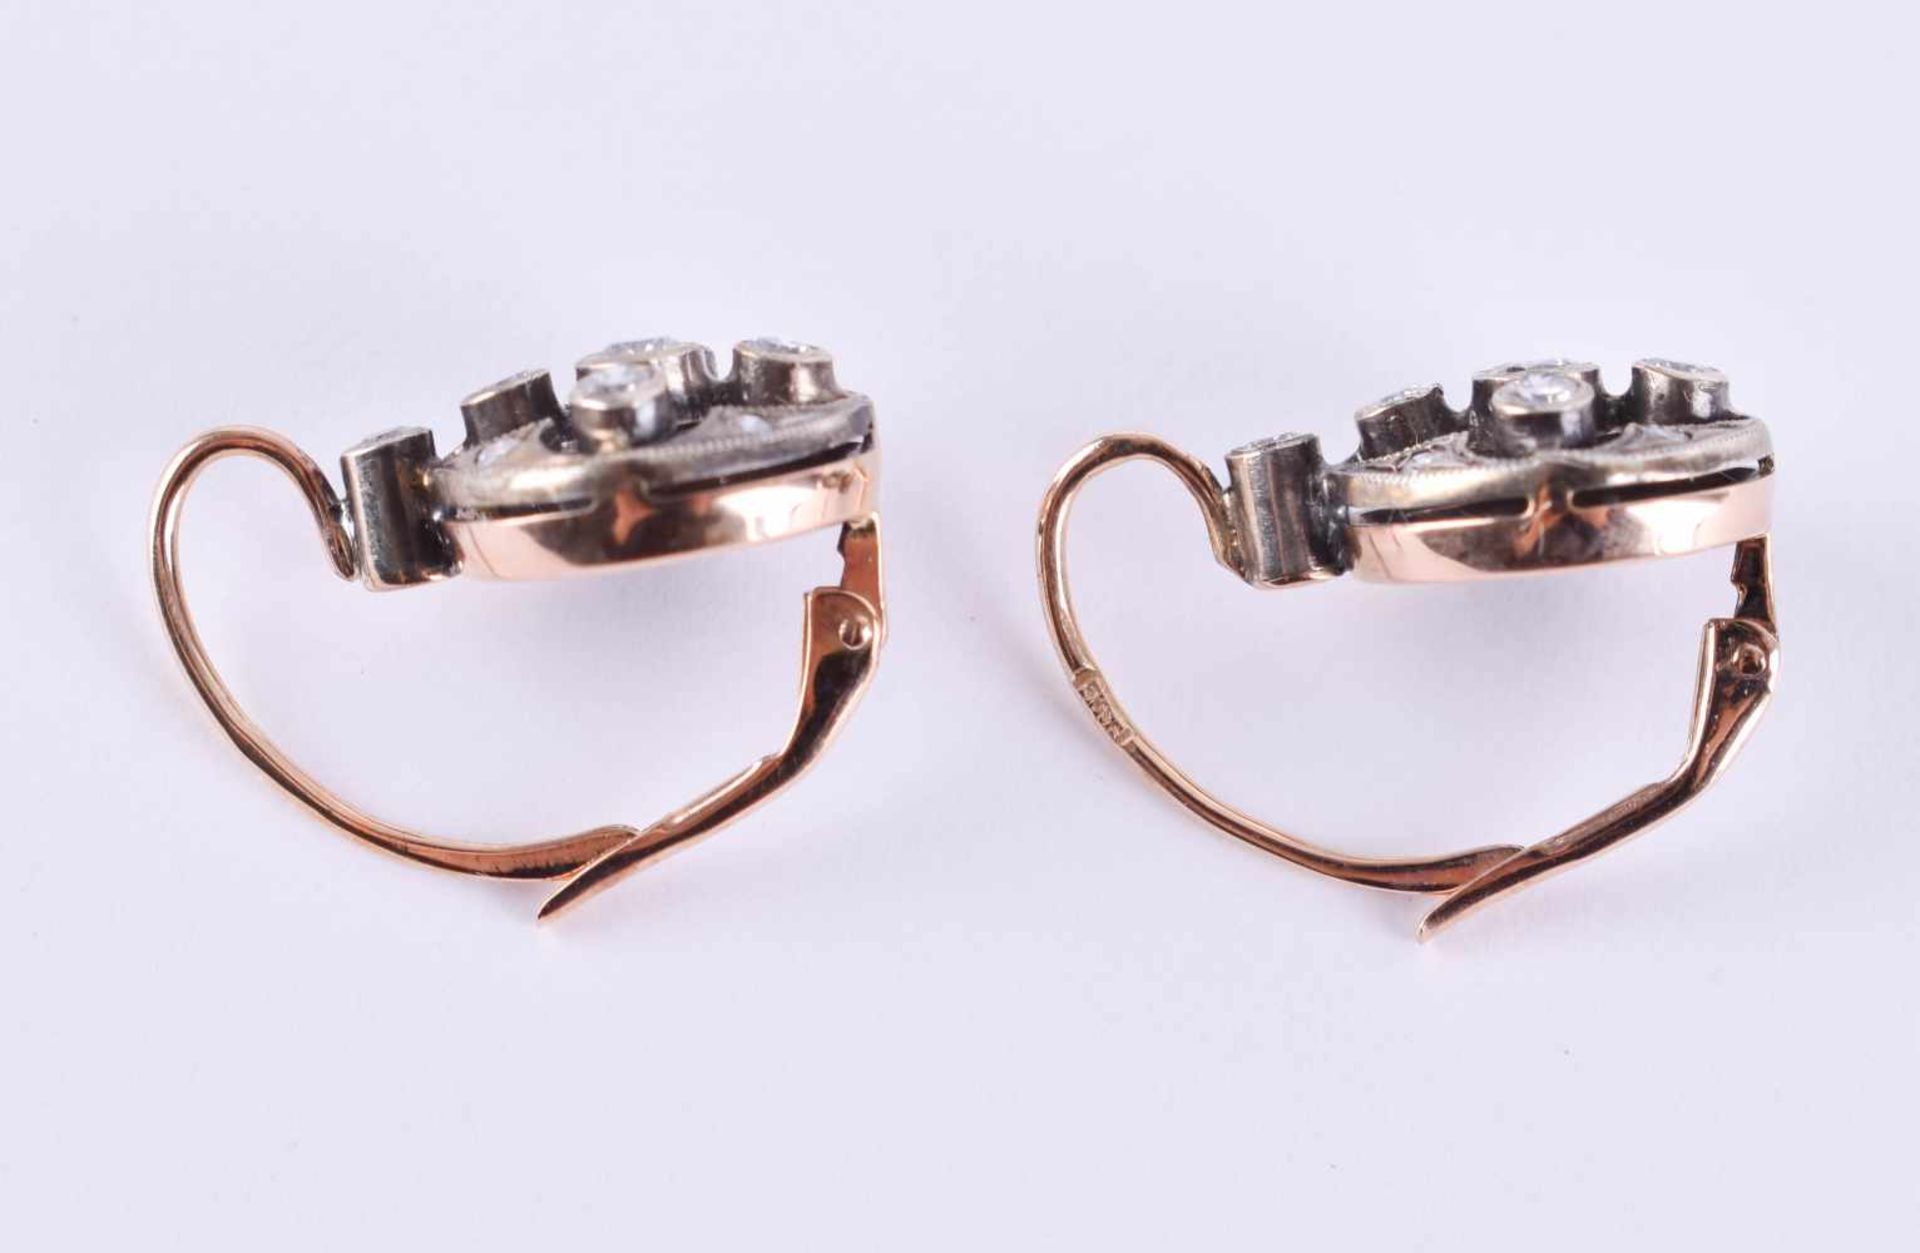 Pair of earrings Russiared gold / white gold 56 Zolotnik, each set with 6 brilliant-cut diamonds - Bild 4 aus 5